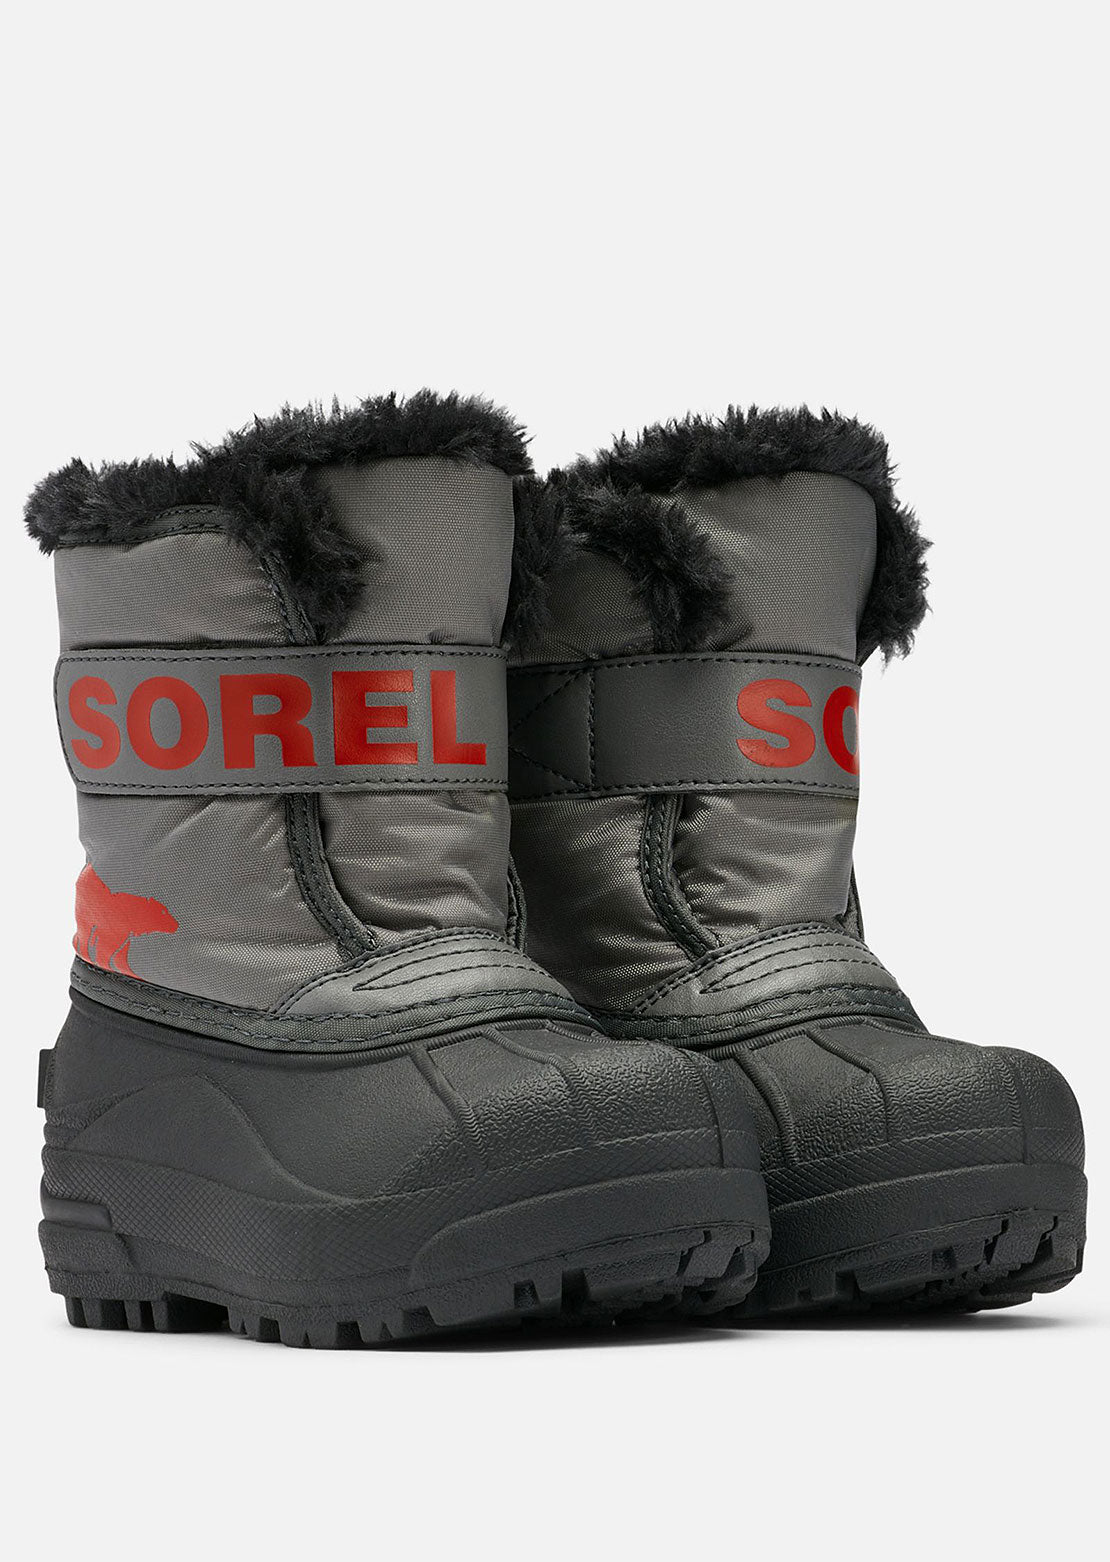 Sorel Infant Snow Commander Boots Quarry/Cherrybomb